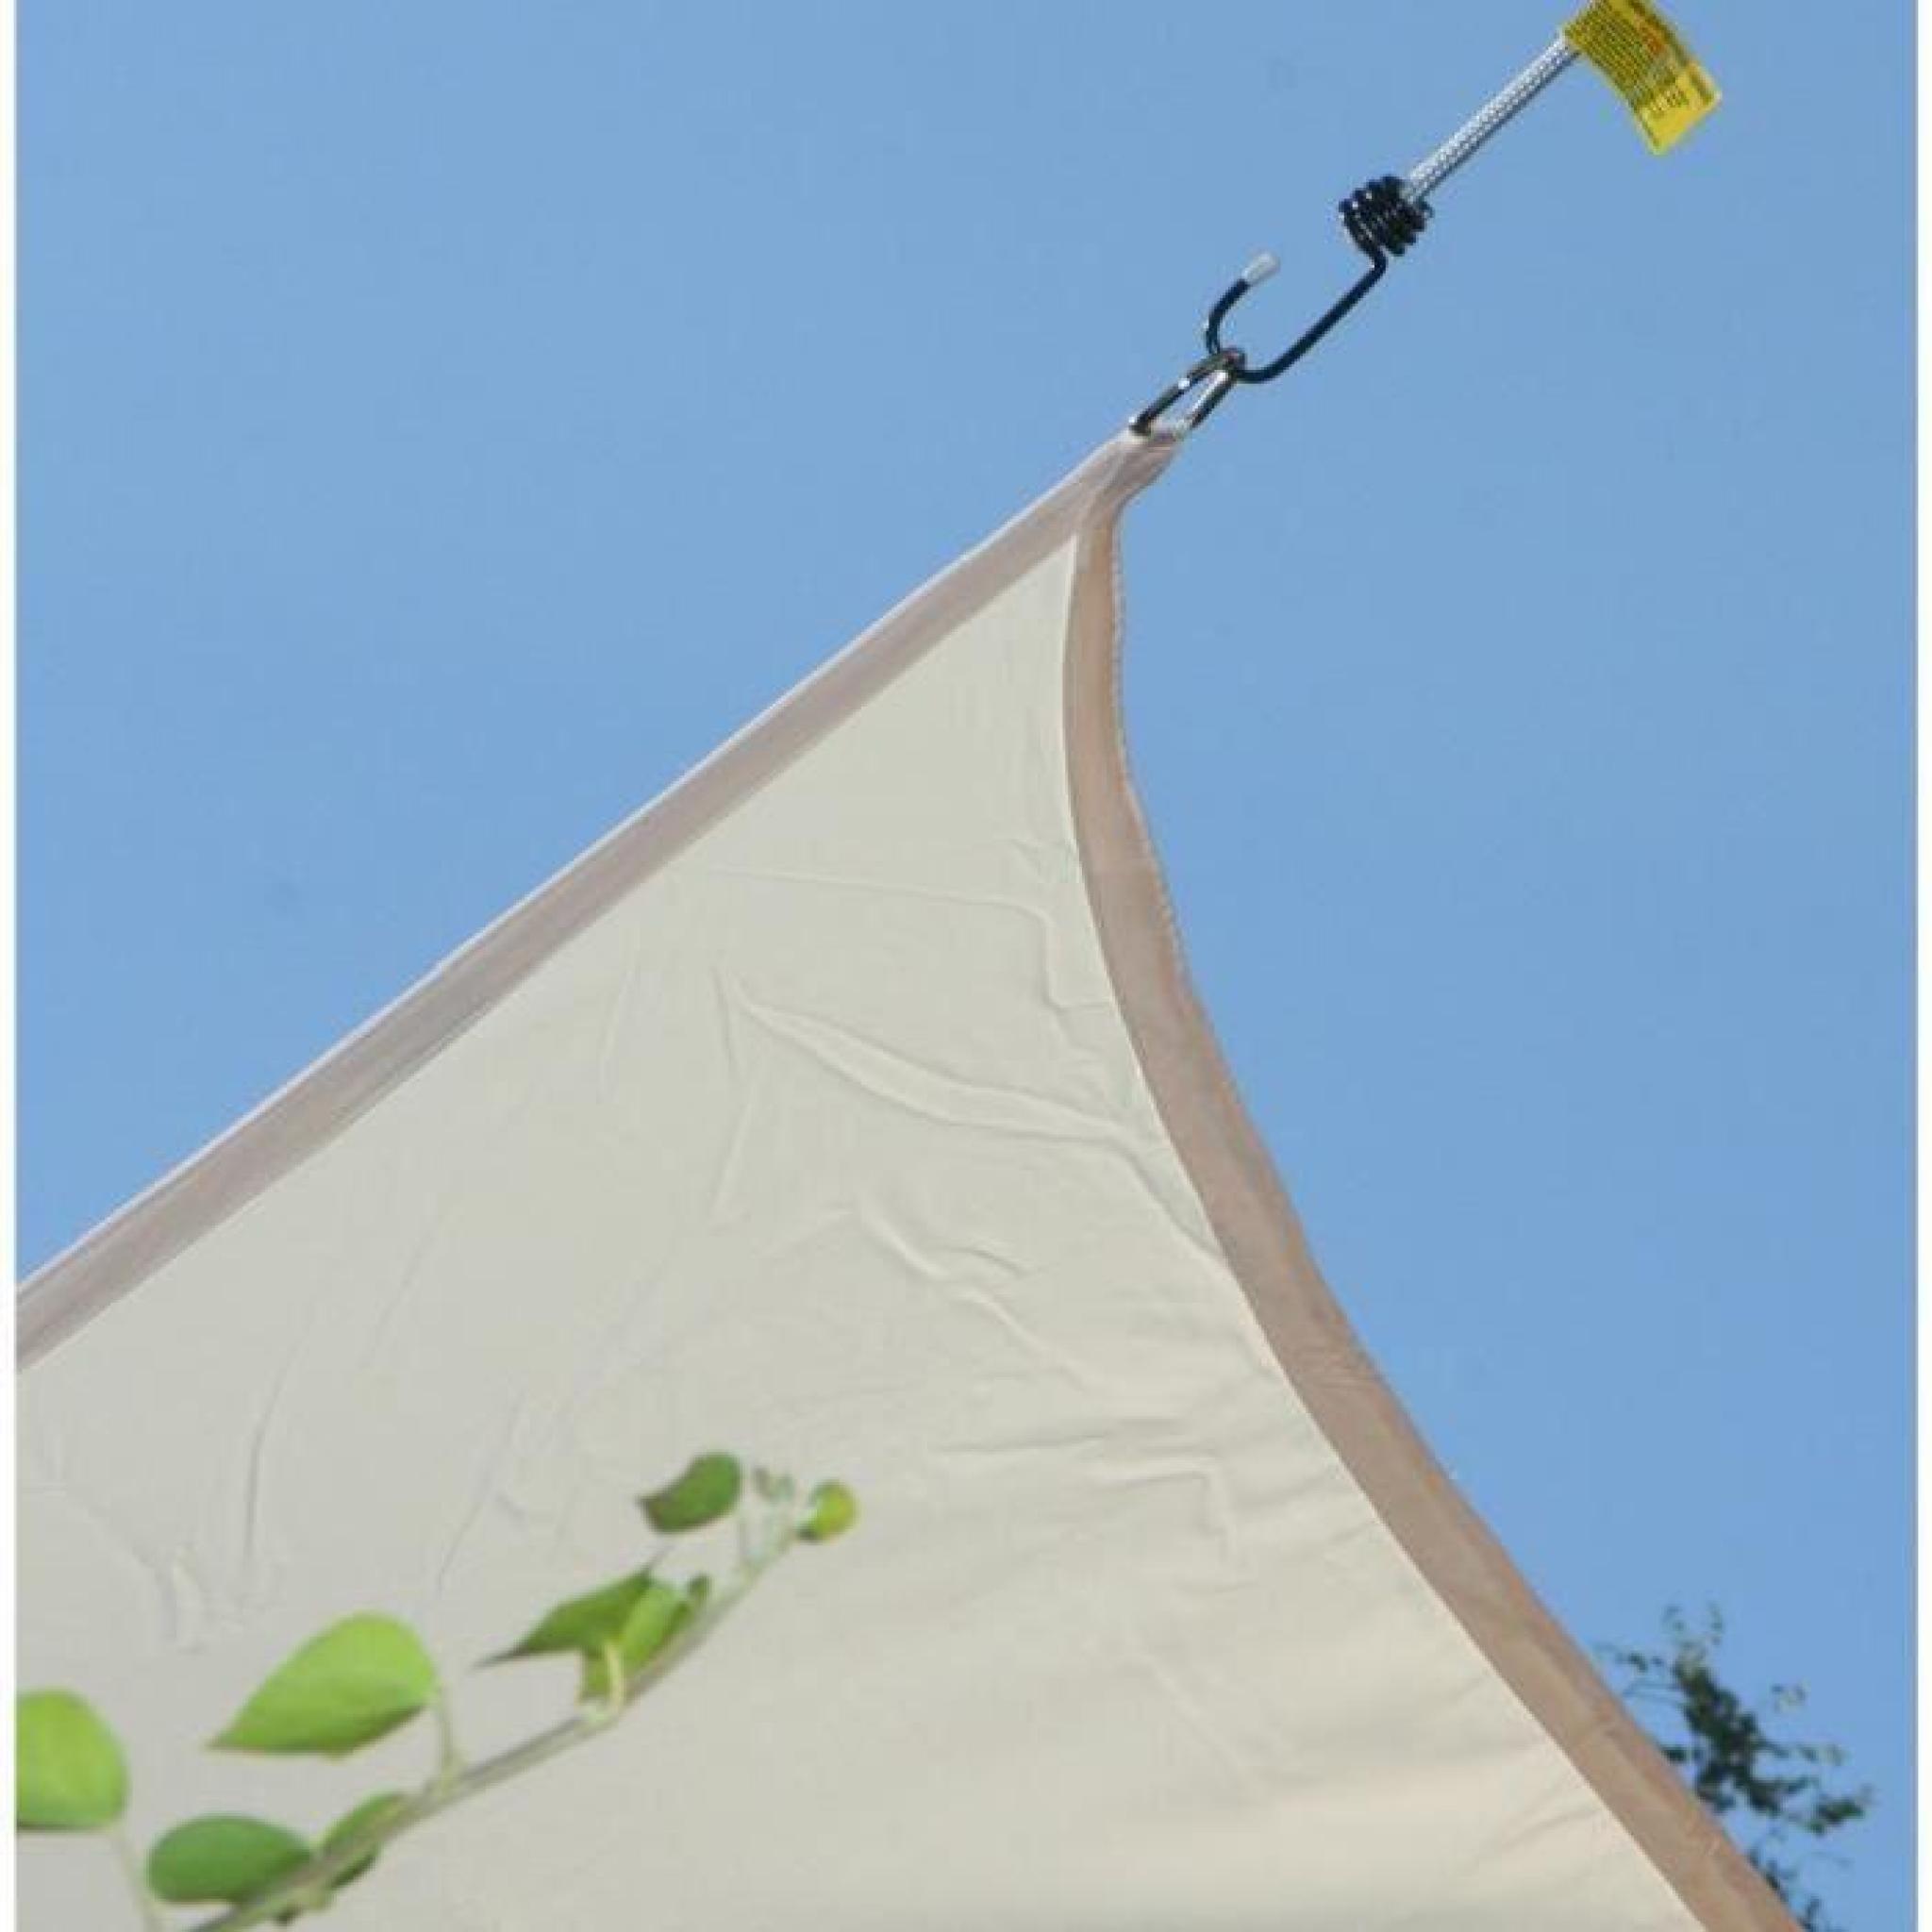 Voile d'ombrage triangulaire Sable en Polyester 200g-m² anti-UV, 500 cm x 500 cm x 500 cm avec kit de fixation pas cher